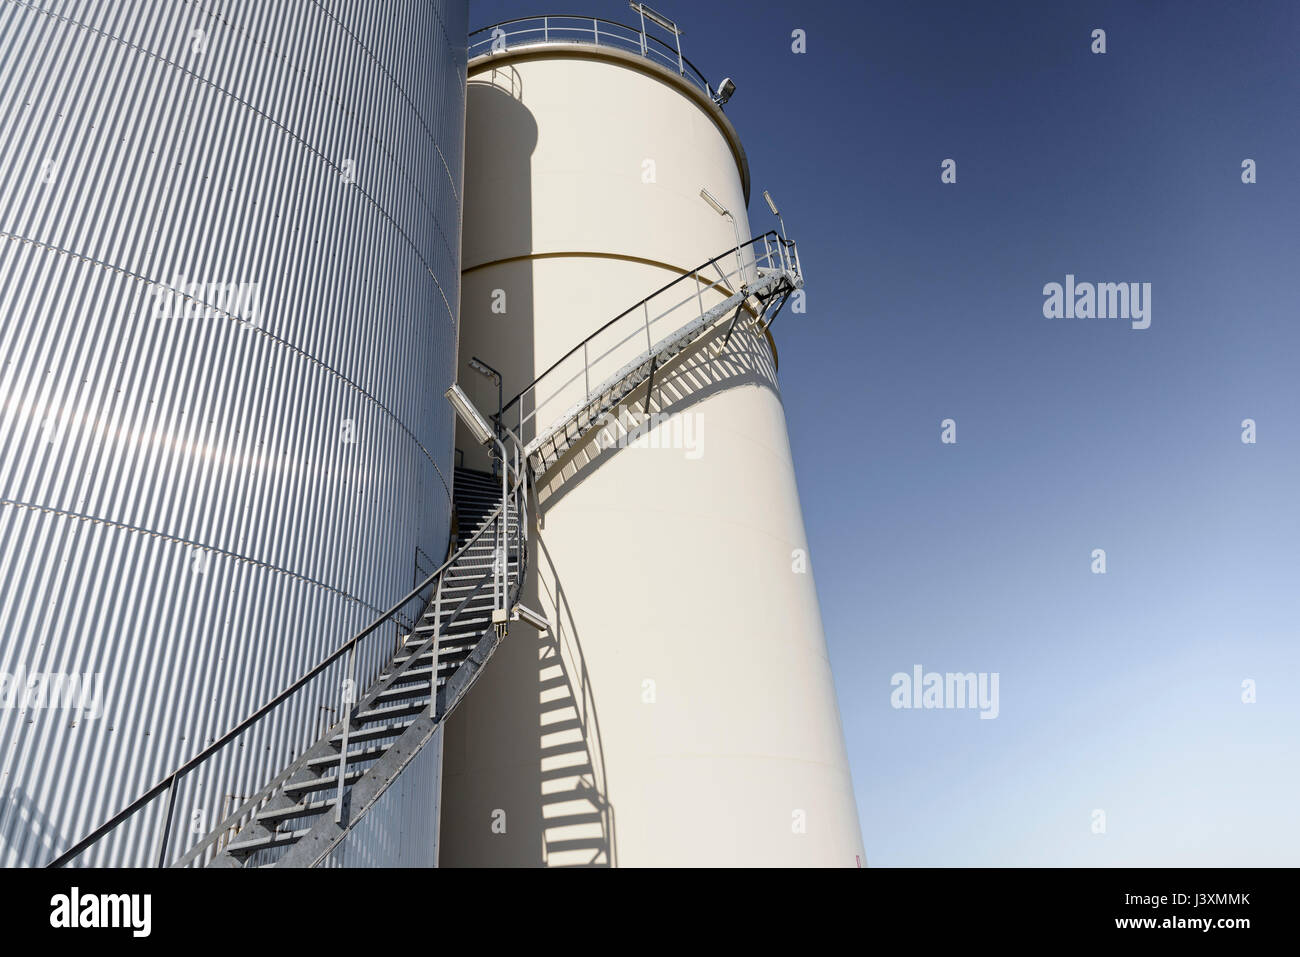 Oil storage tanks in oil blending factory Stock Photo